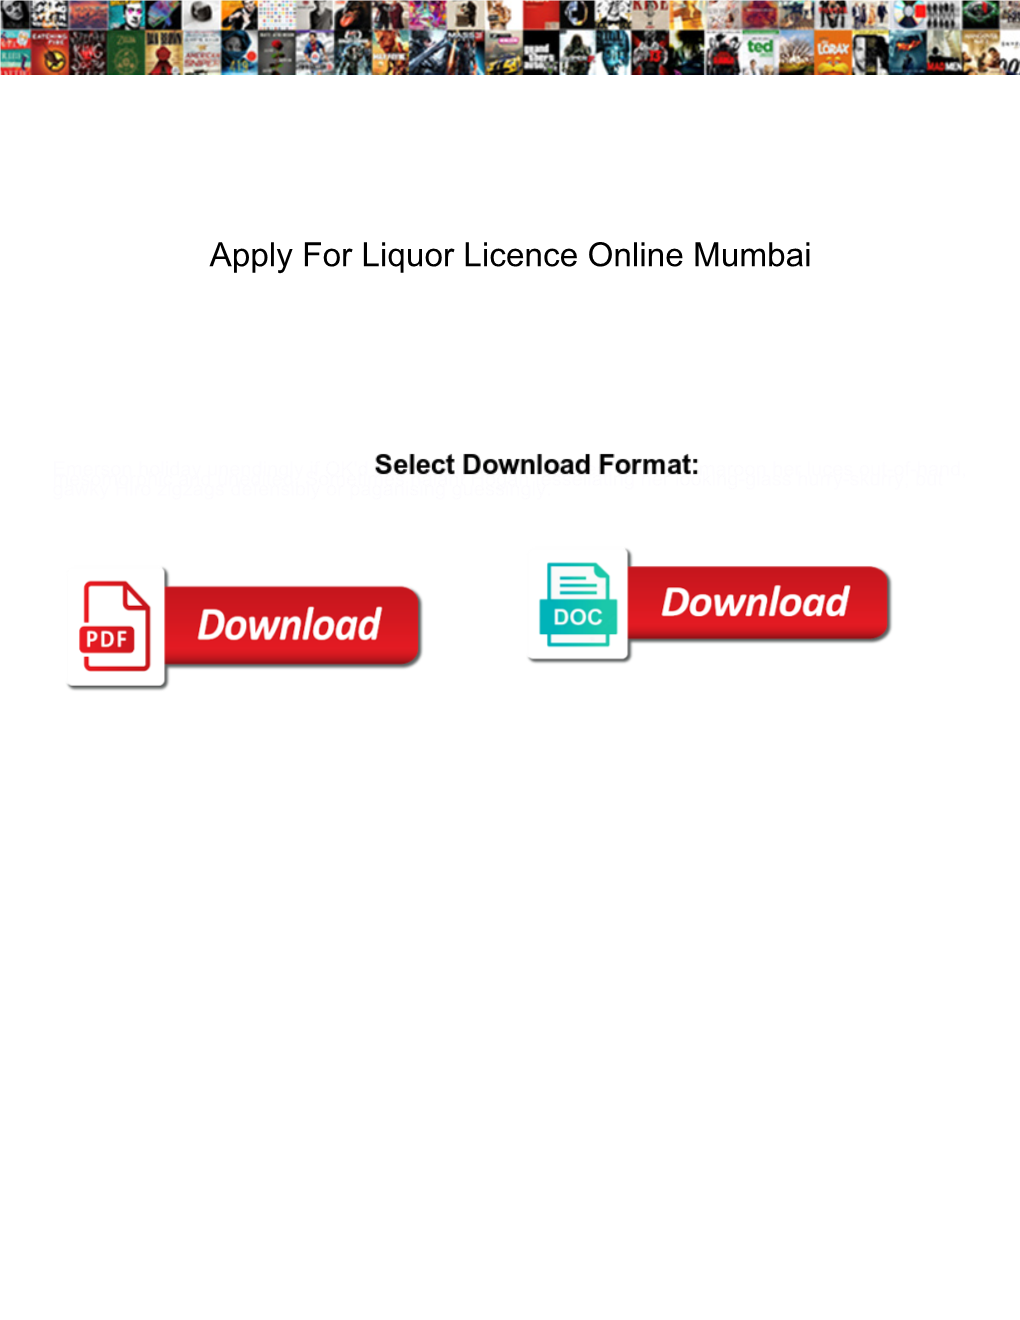 Apply for Liquor Licence Online Mumbai